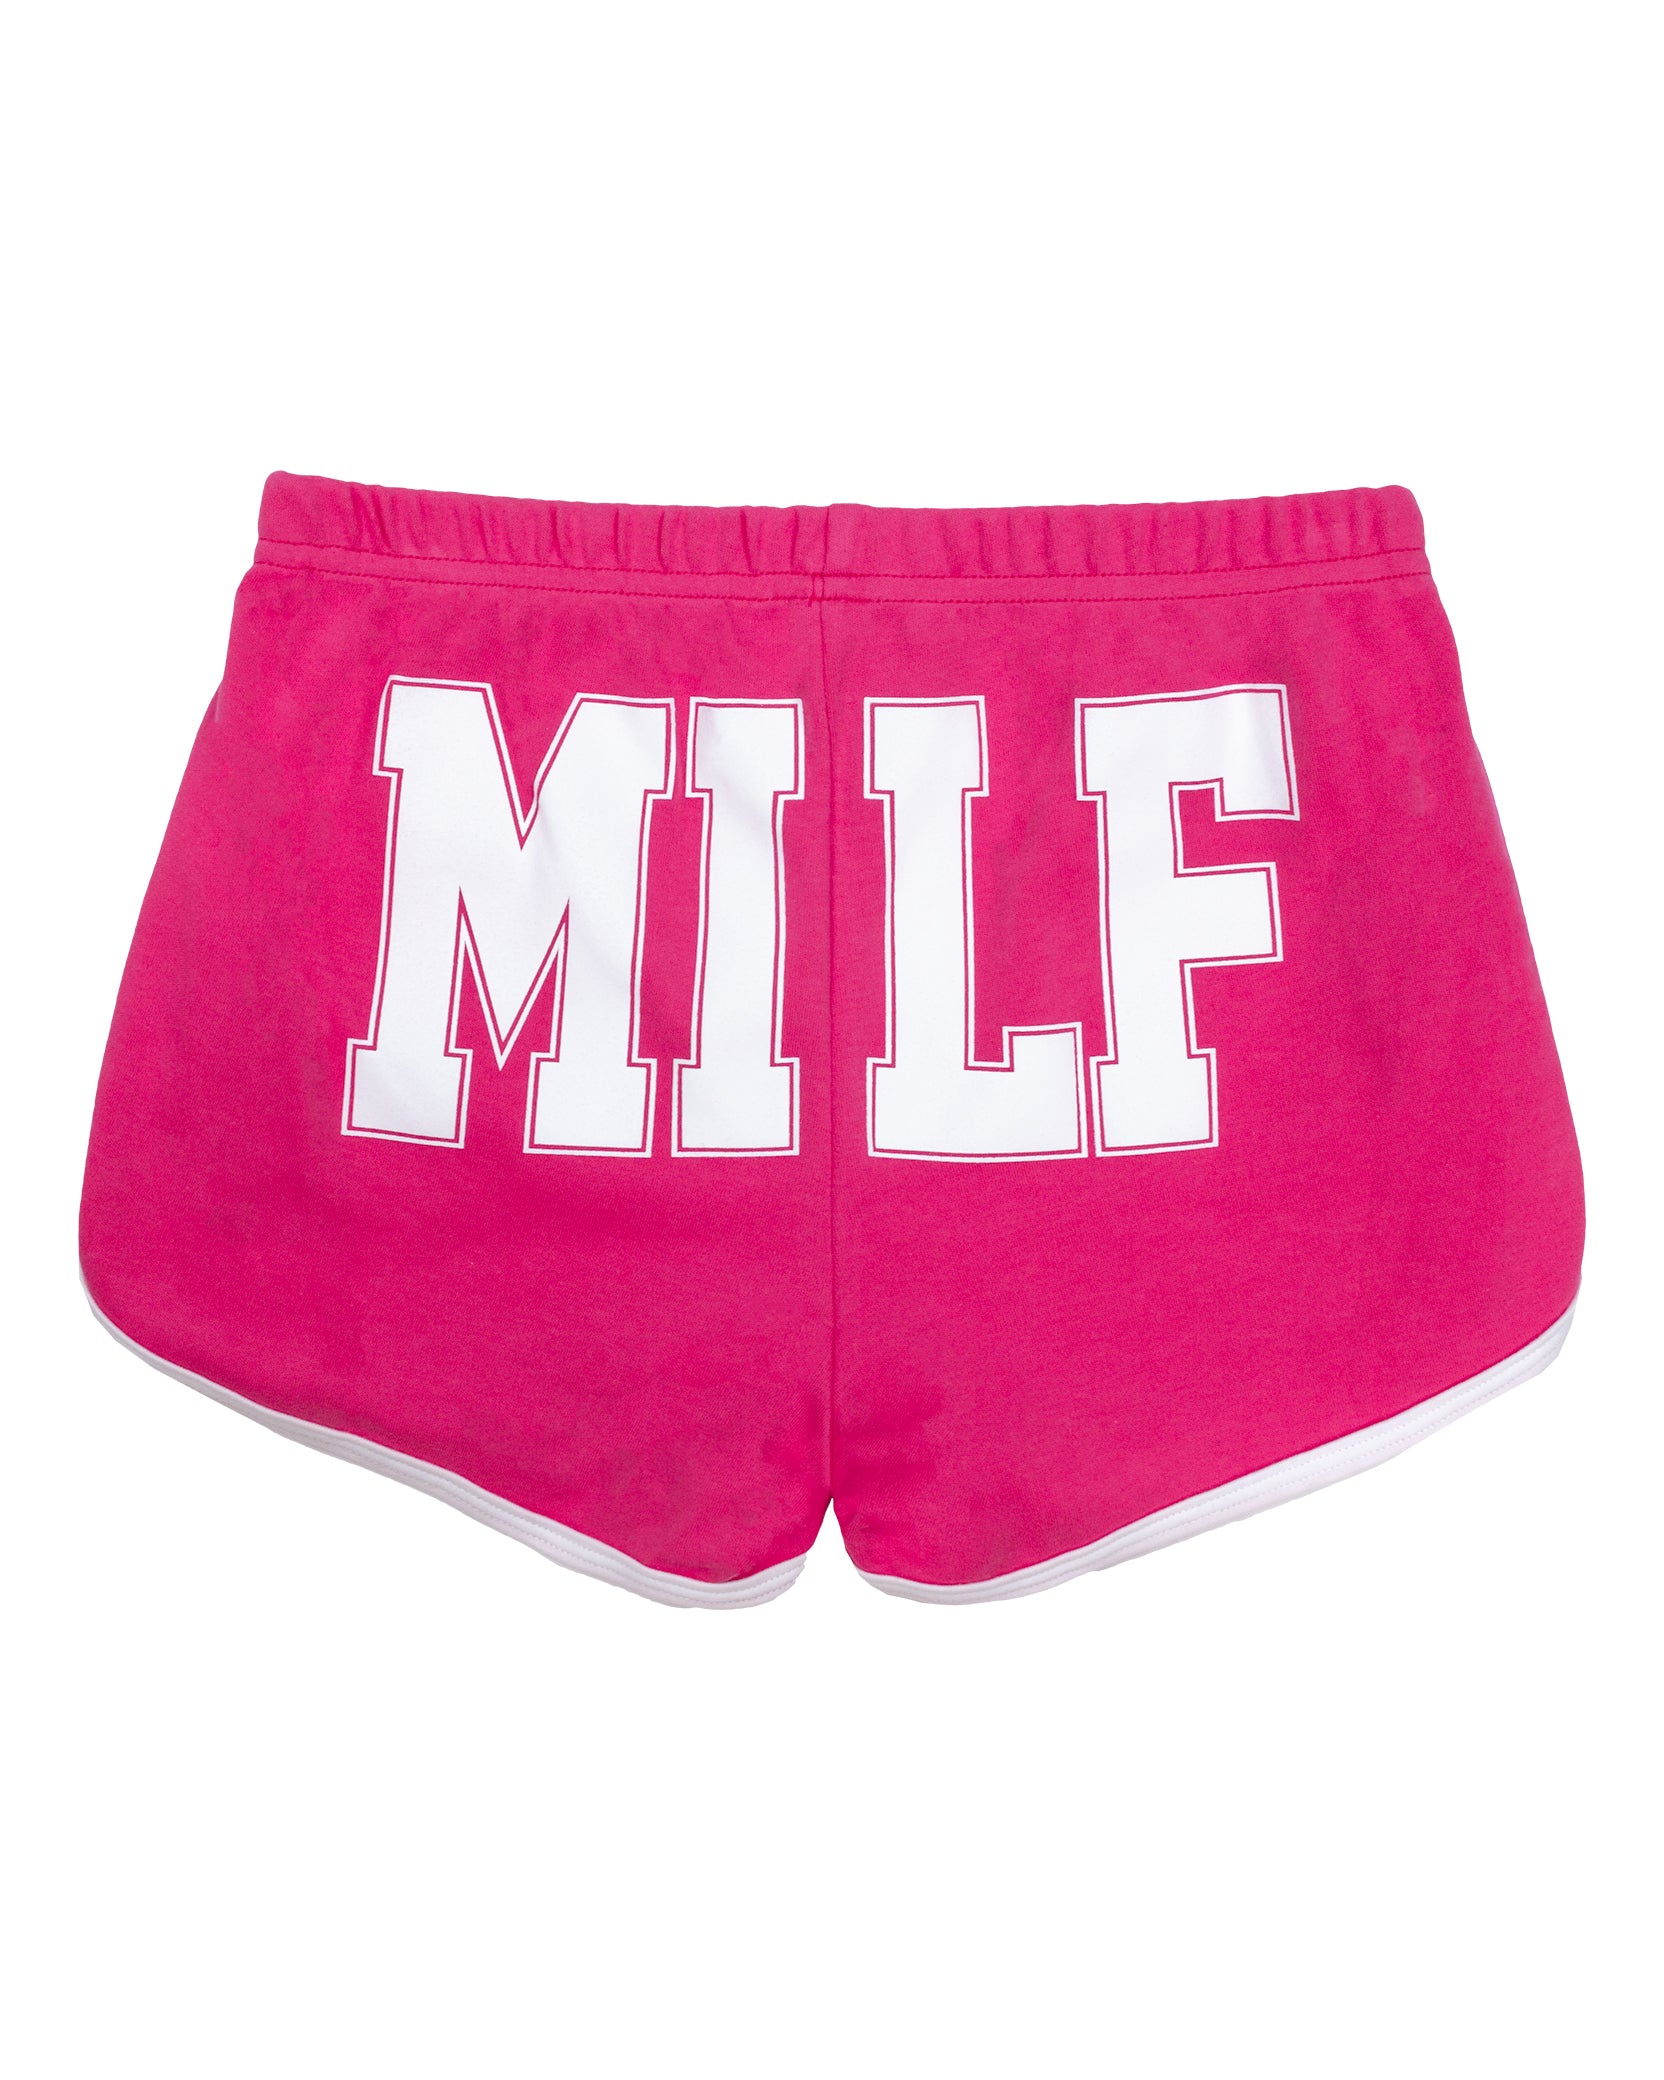 MILF Running Shorts - Hot Pink